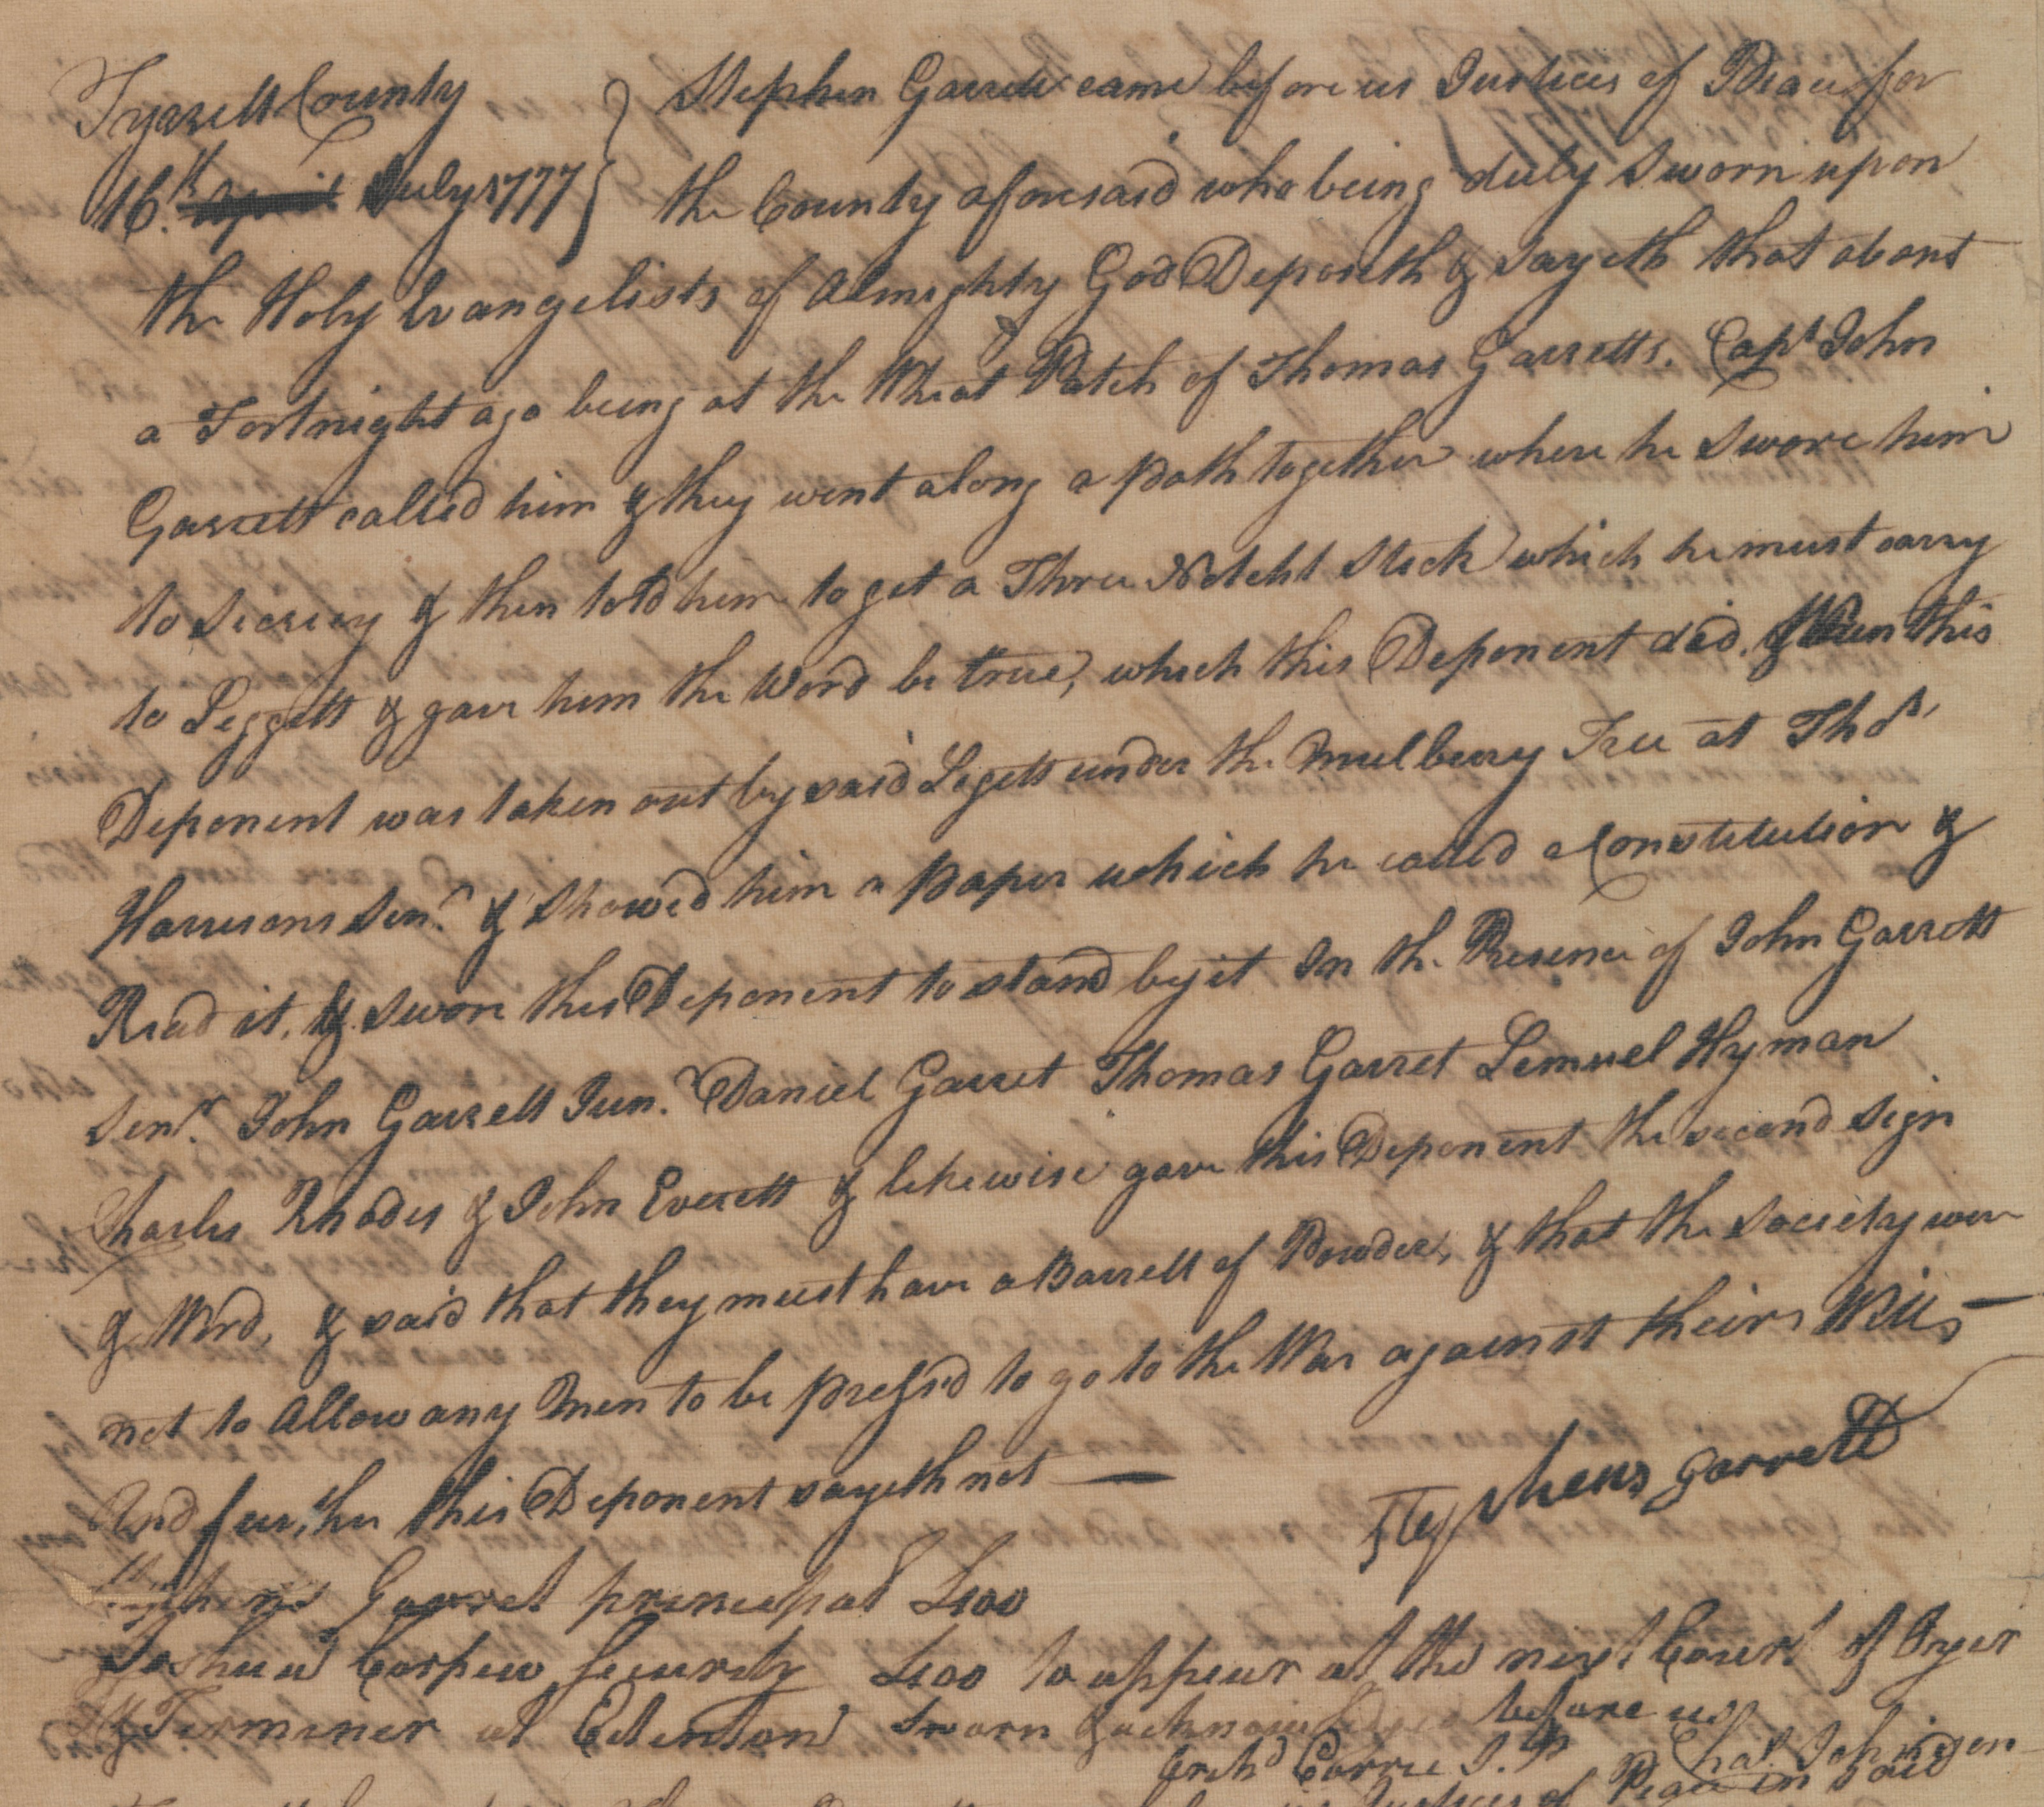 Deposition of Stephen Garrett, 16 July 1777, page 1